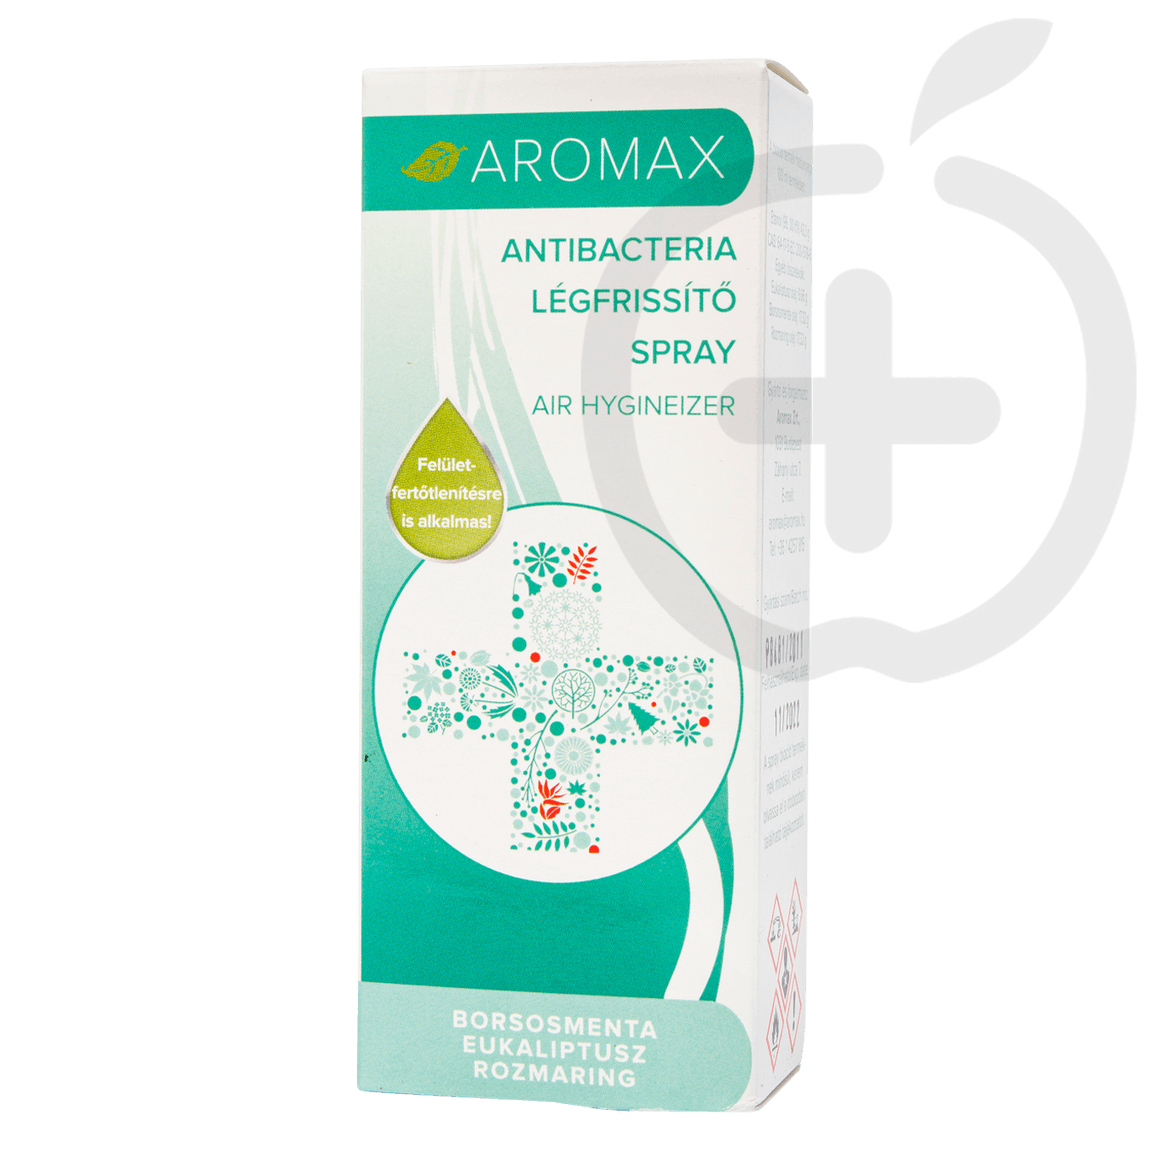 Aromax Antibacteria borsmenta-eukaliptusz-rozmaring légfrissítő spray